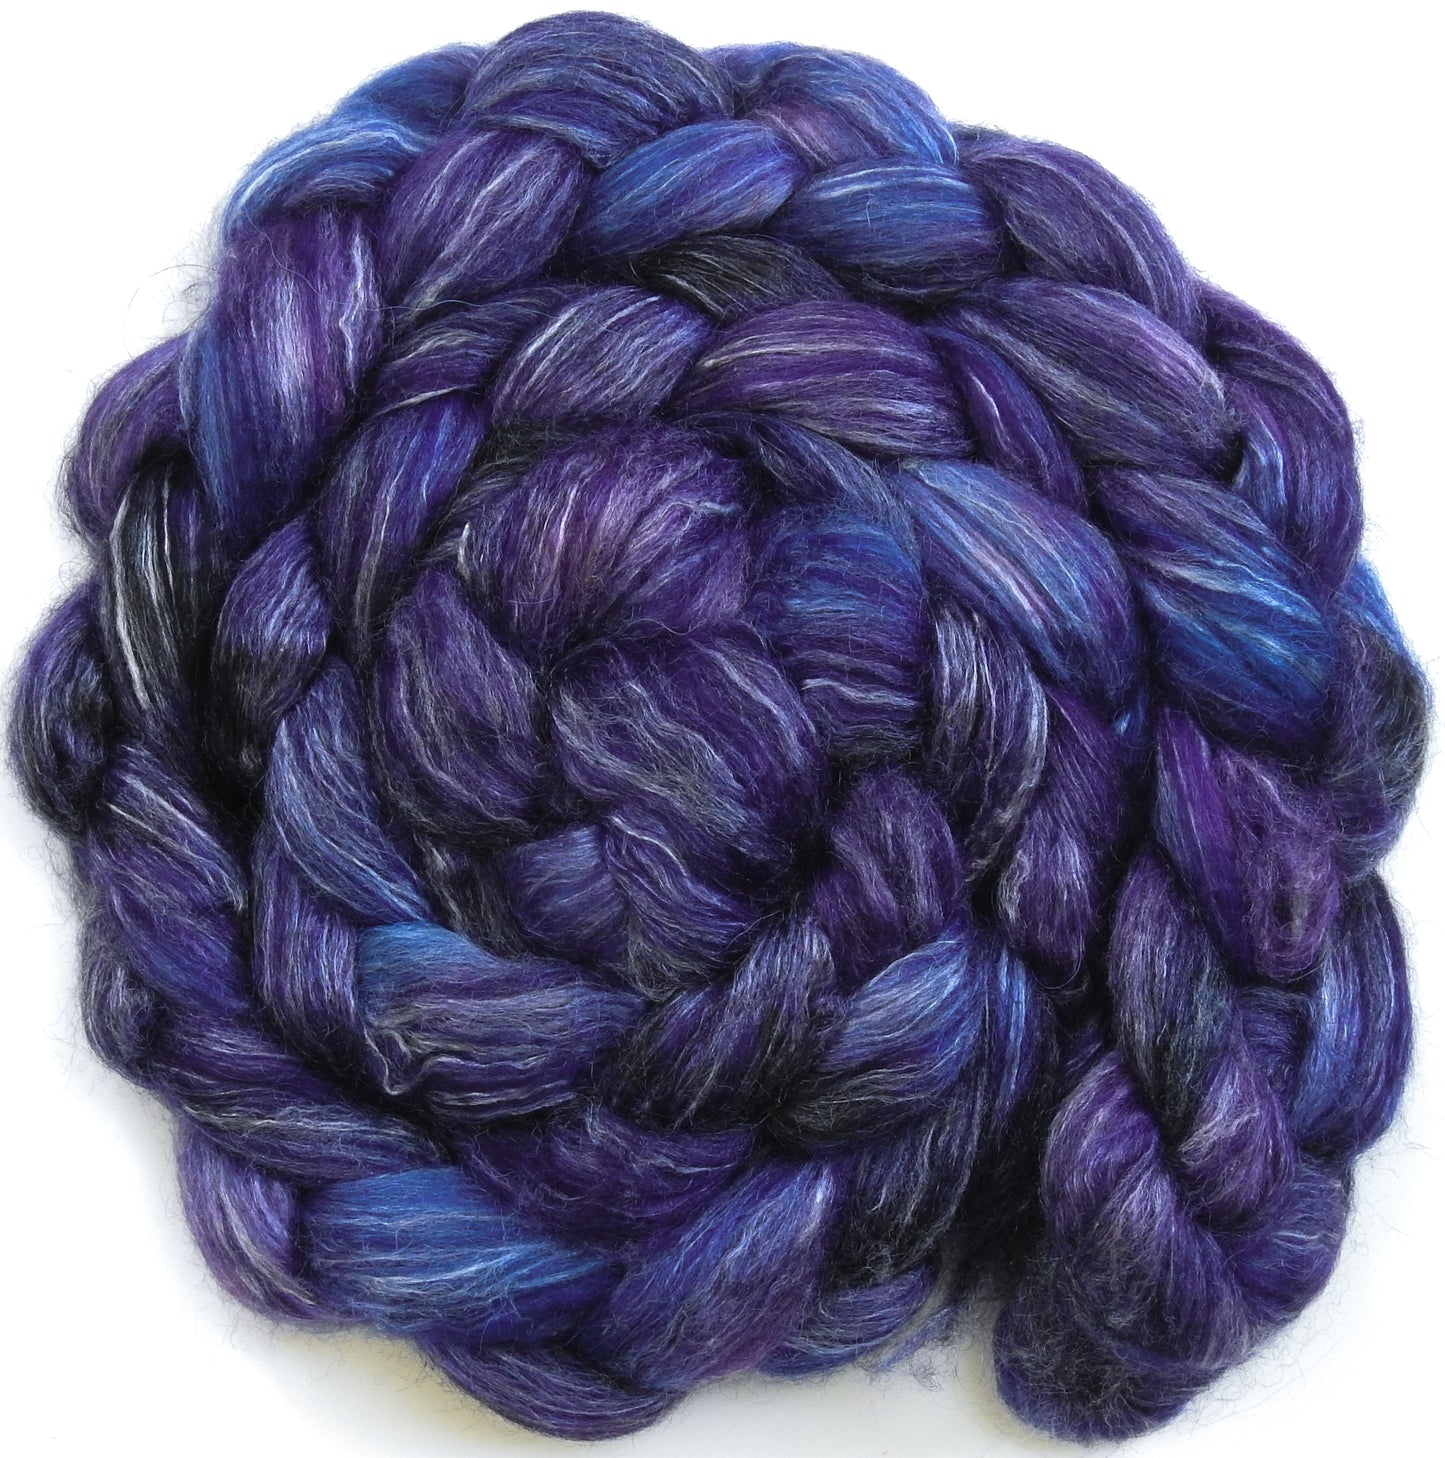 Violet Anemone (5.3 oz) Batt in a Braid #57- Camel/Baby Alpaca/Mint fiber  (50/25/25)